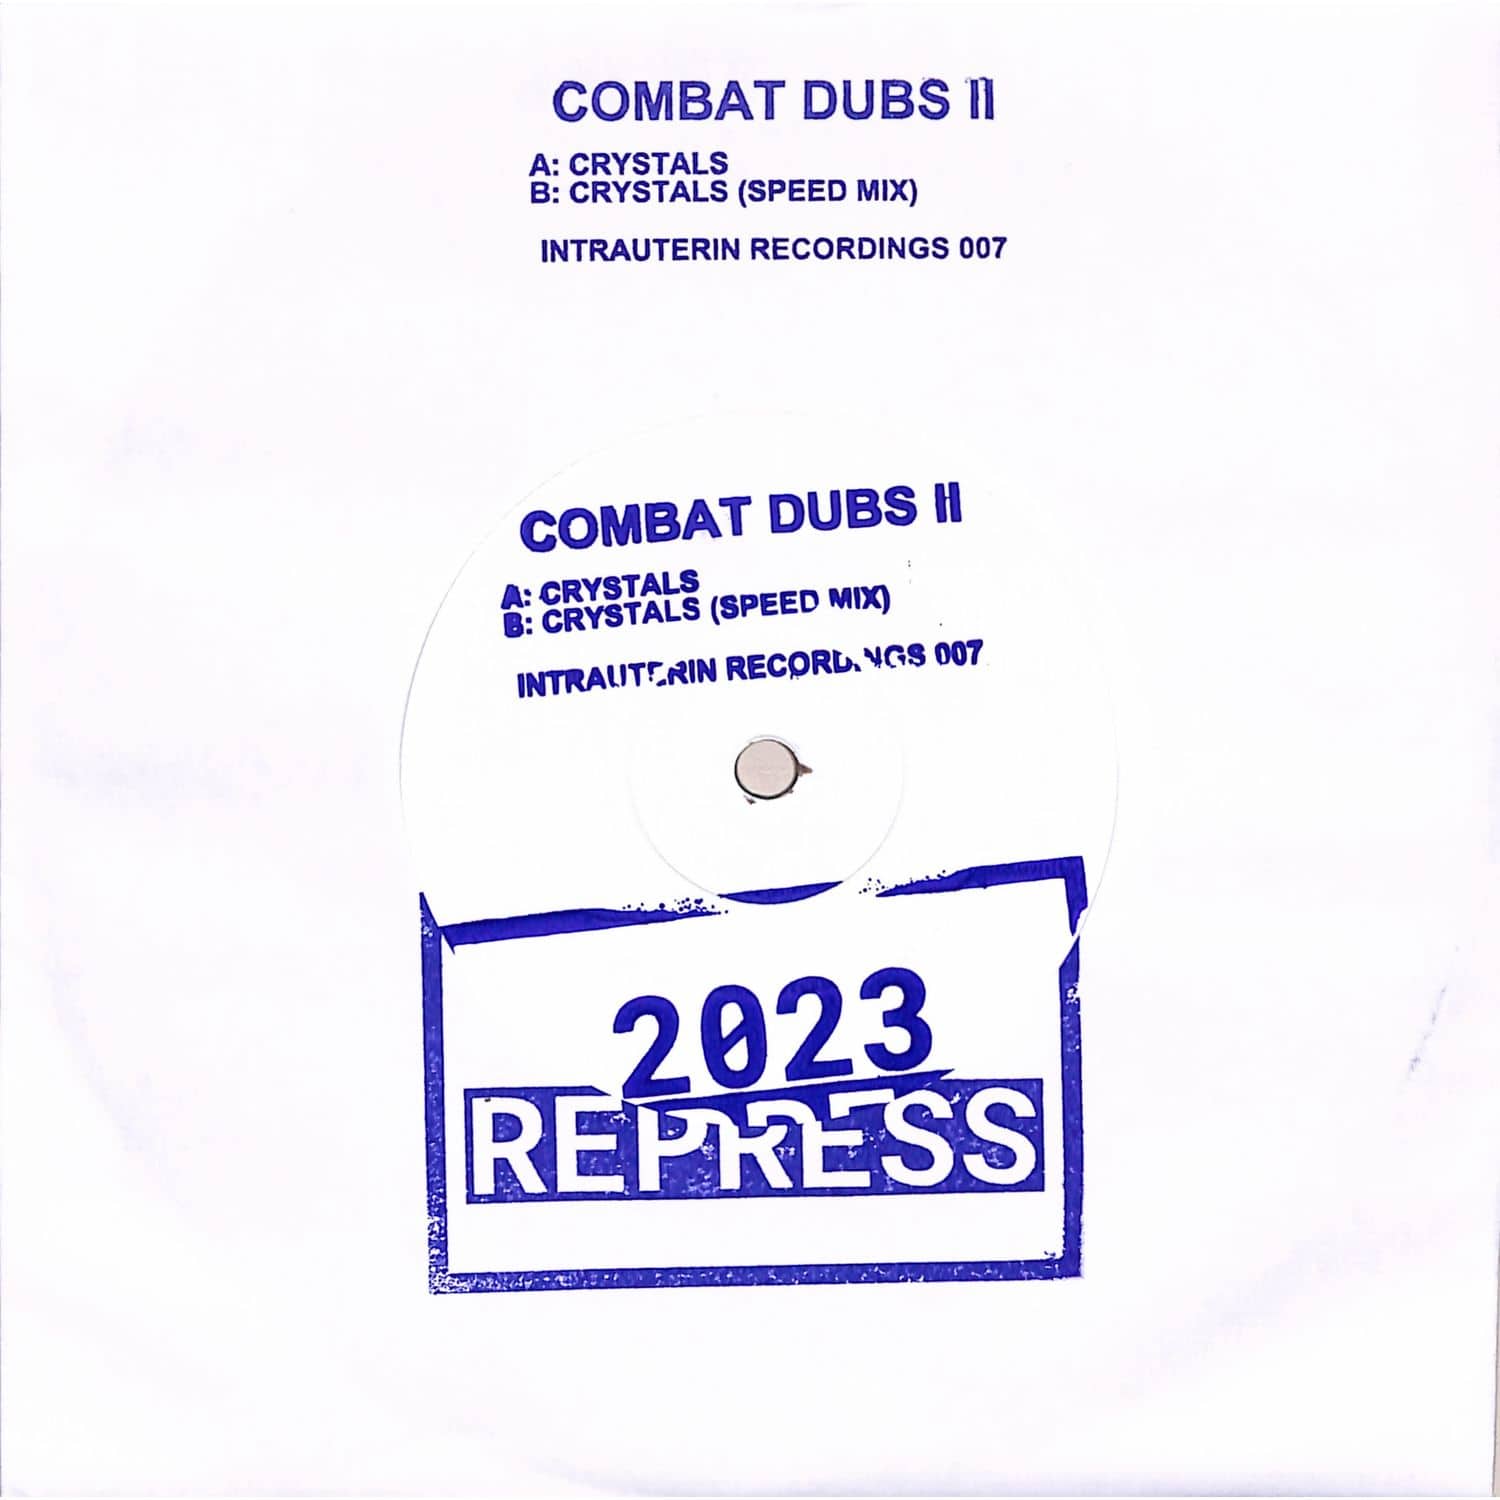 Combat Dubs - COMBAT DUBS II 